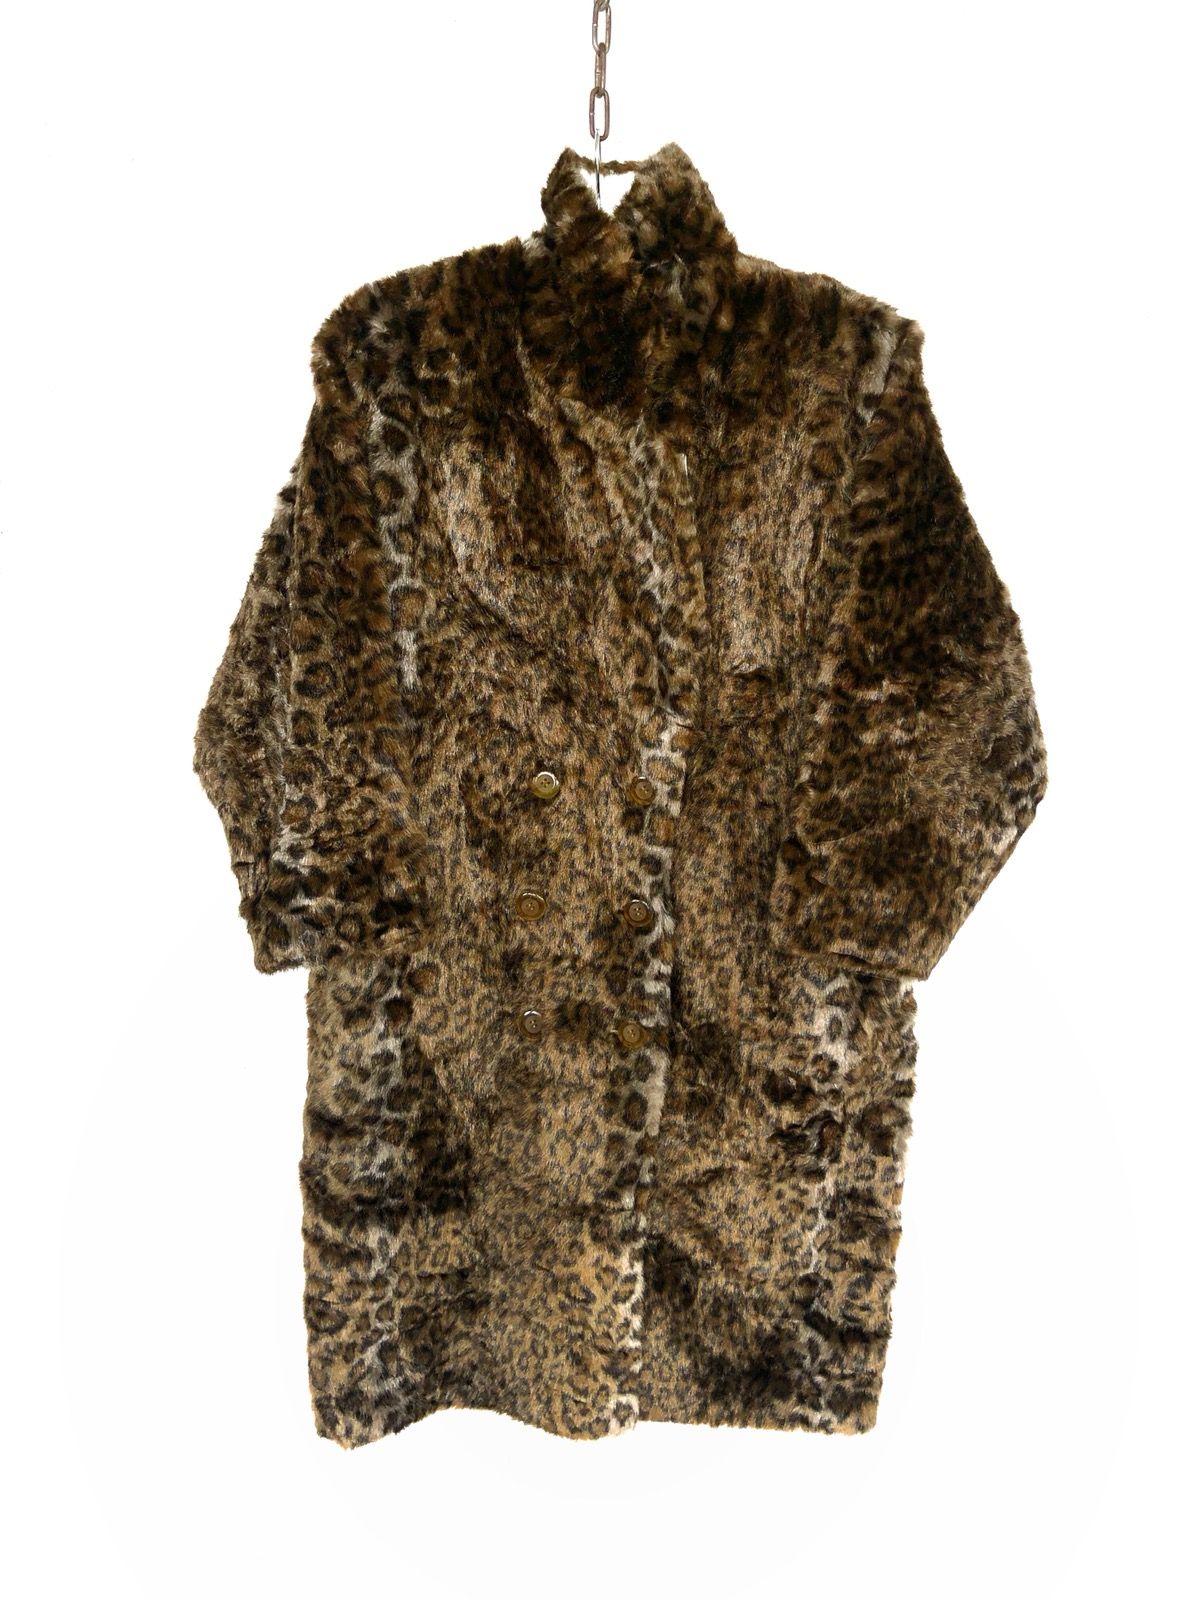 Pre-owned Andreluciano X Mink Fur Coat Heatvtg 80's Skin Mink Fur Coat Like Fendi In Leopard Print